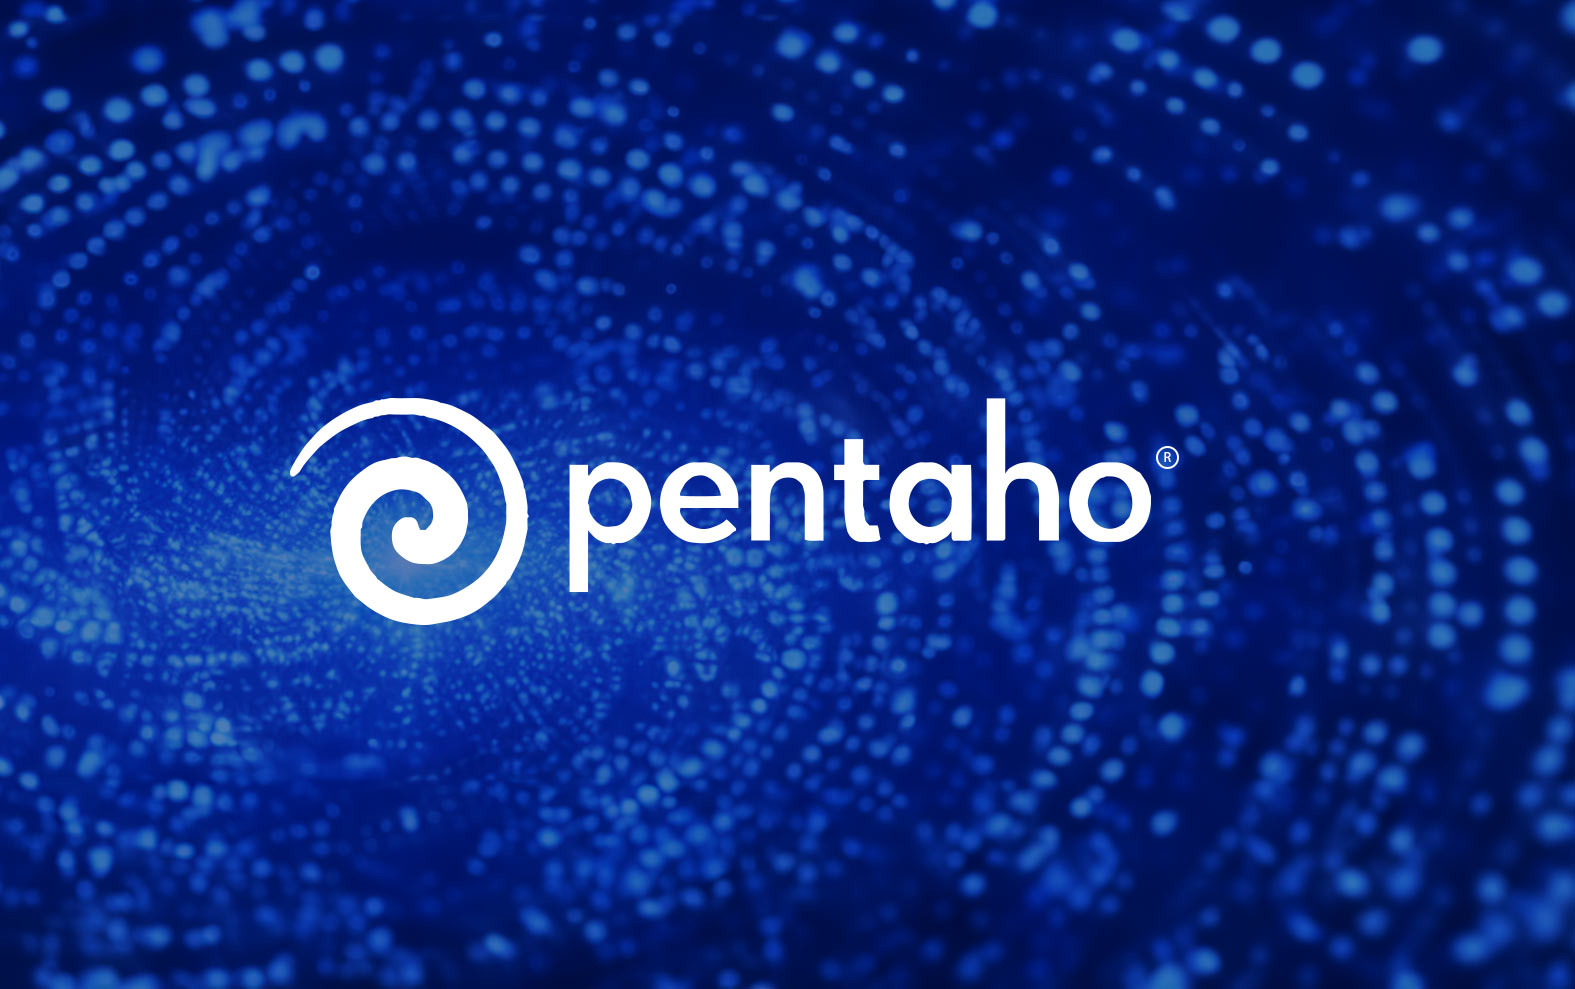 Image of Pentaho logo on blue sparkling background